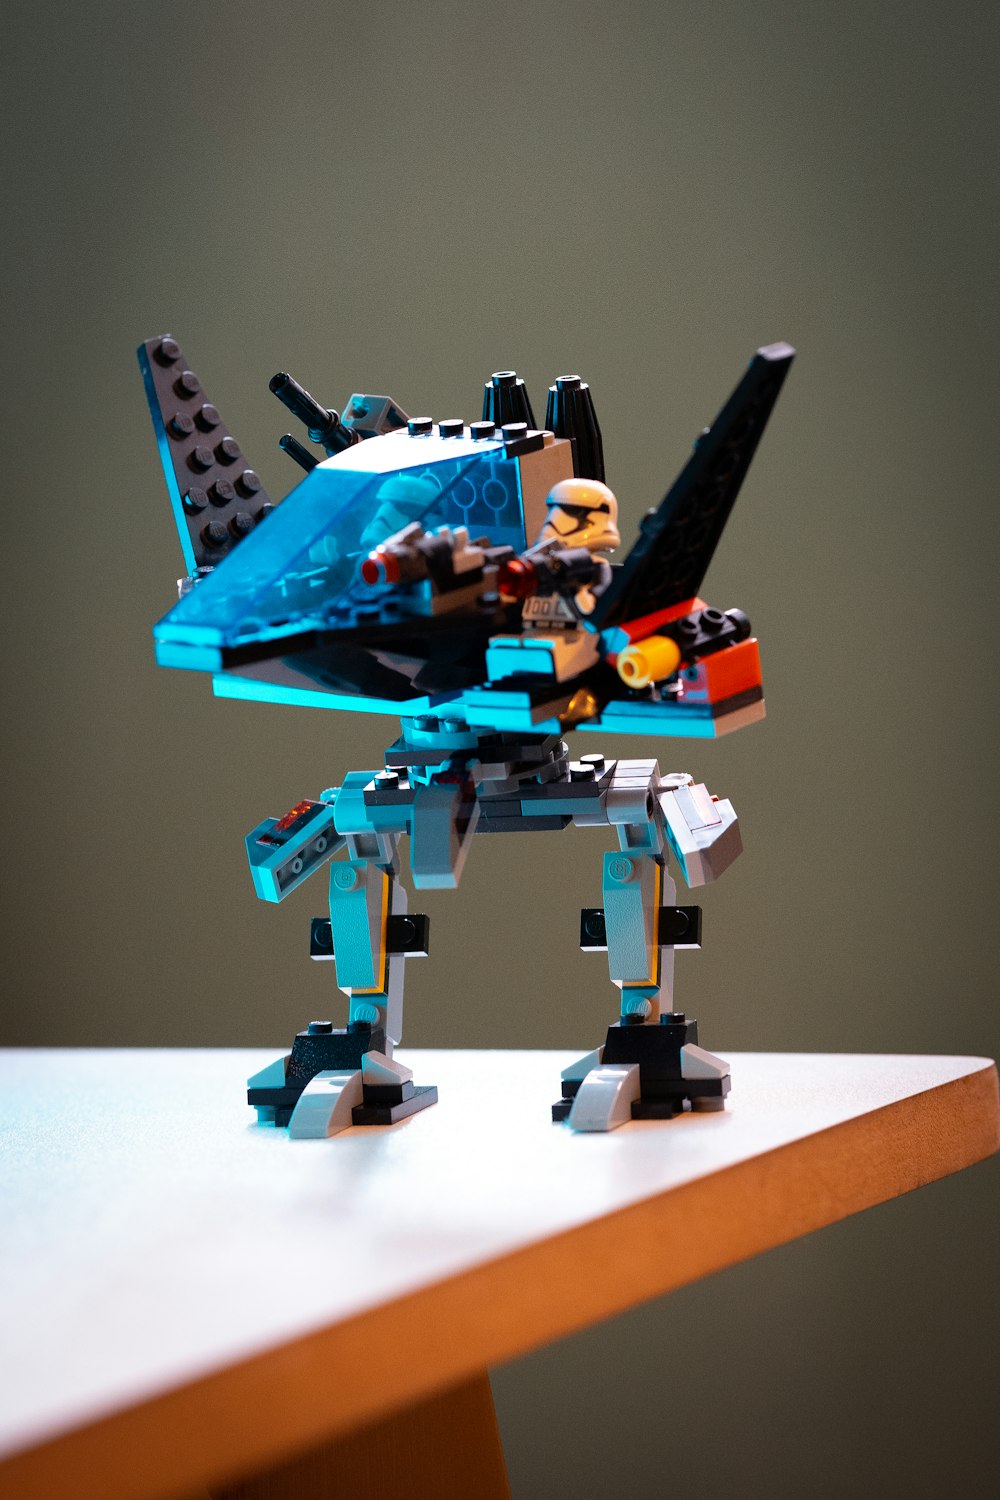 Lego Robot Pictures | Download Free Images on Unsplash